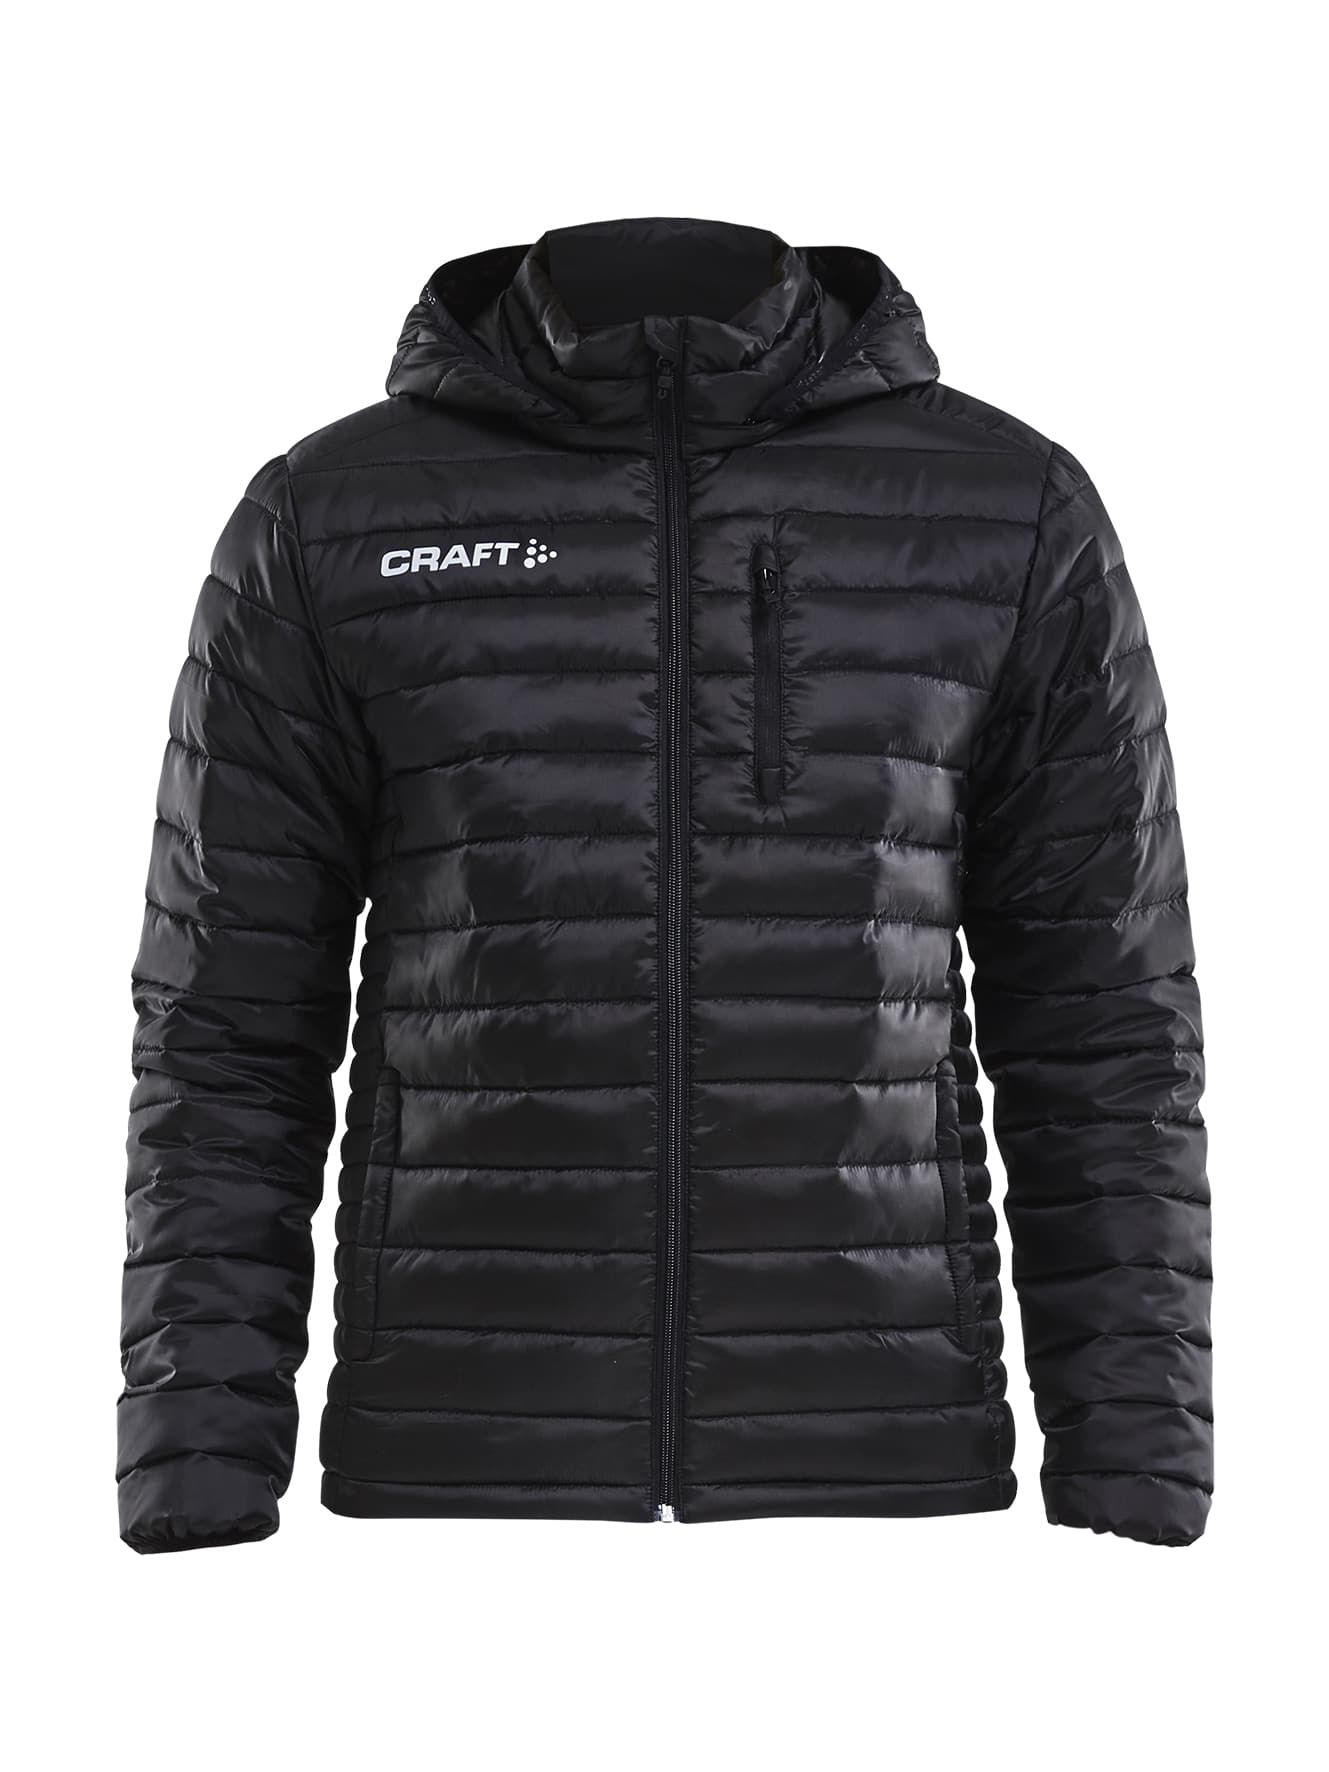 Craft - Isolate Jacket Maend - Black XL